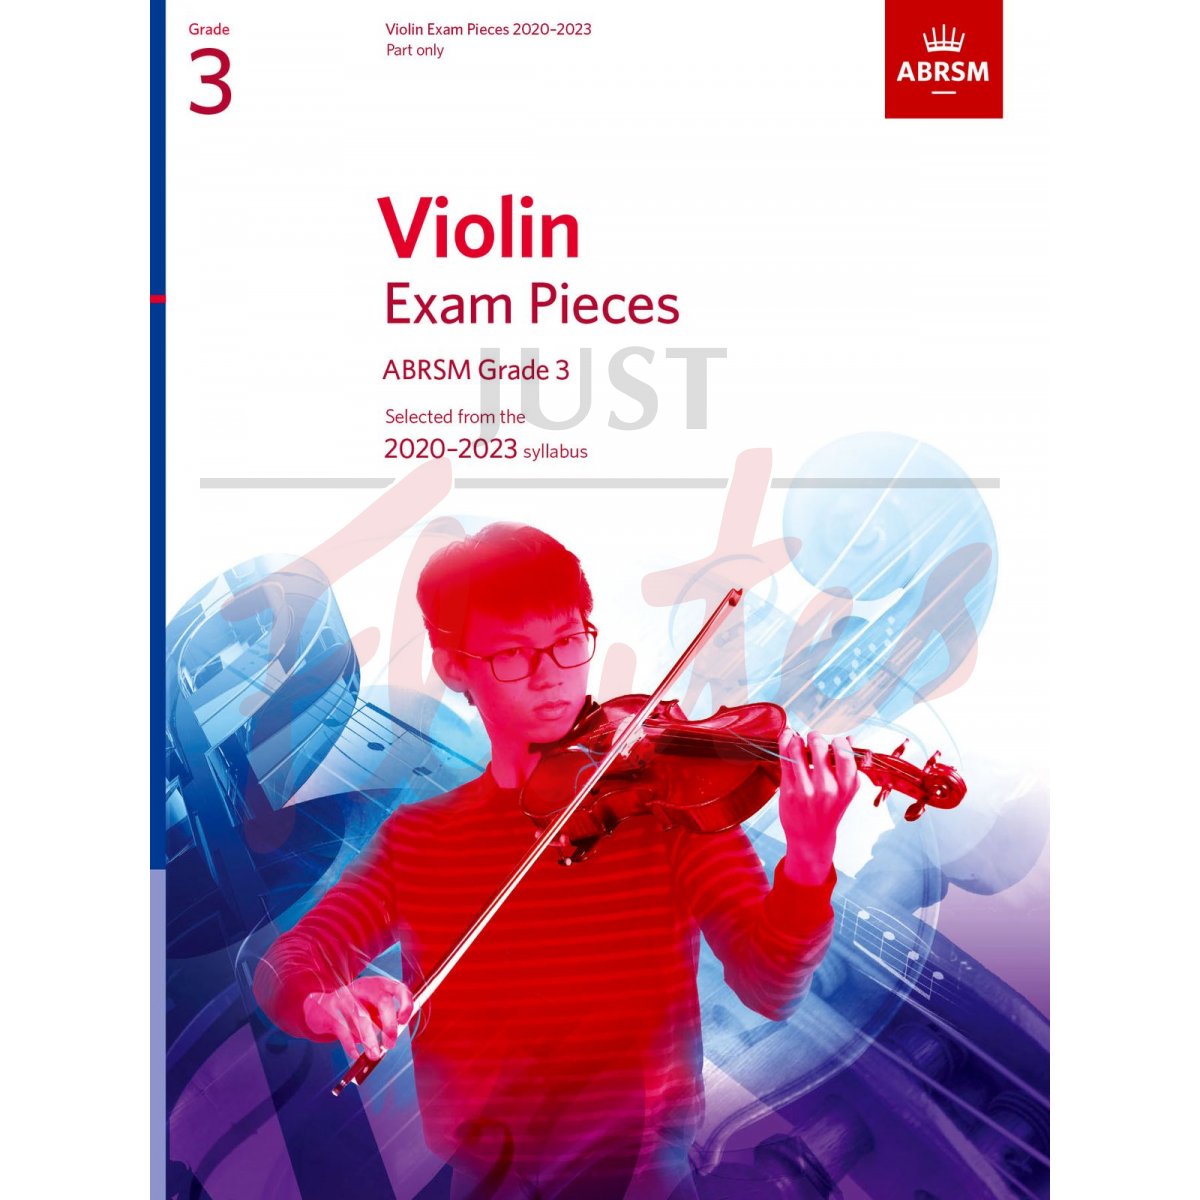 Violin Exam Pieces 2020-2023, Grade 3 [Part Only]